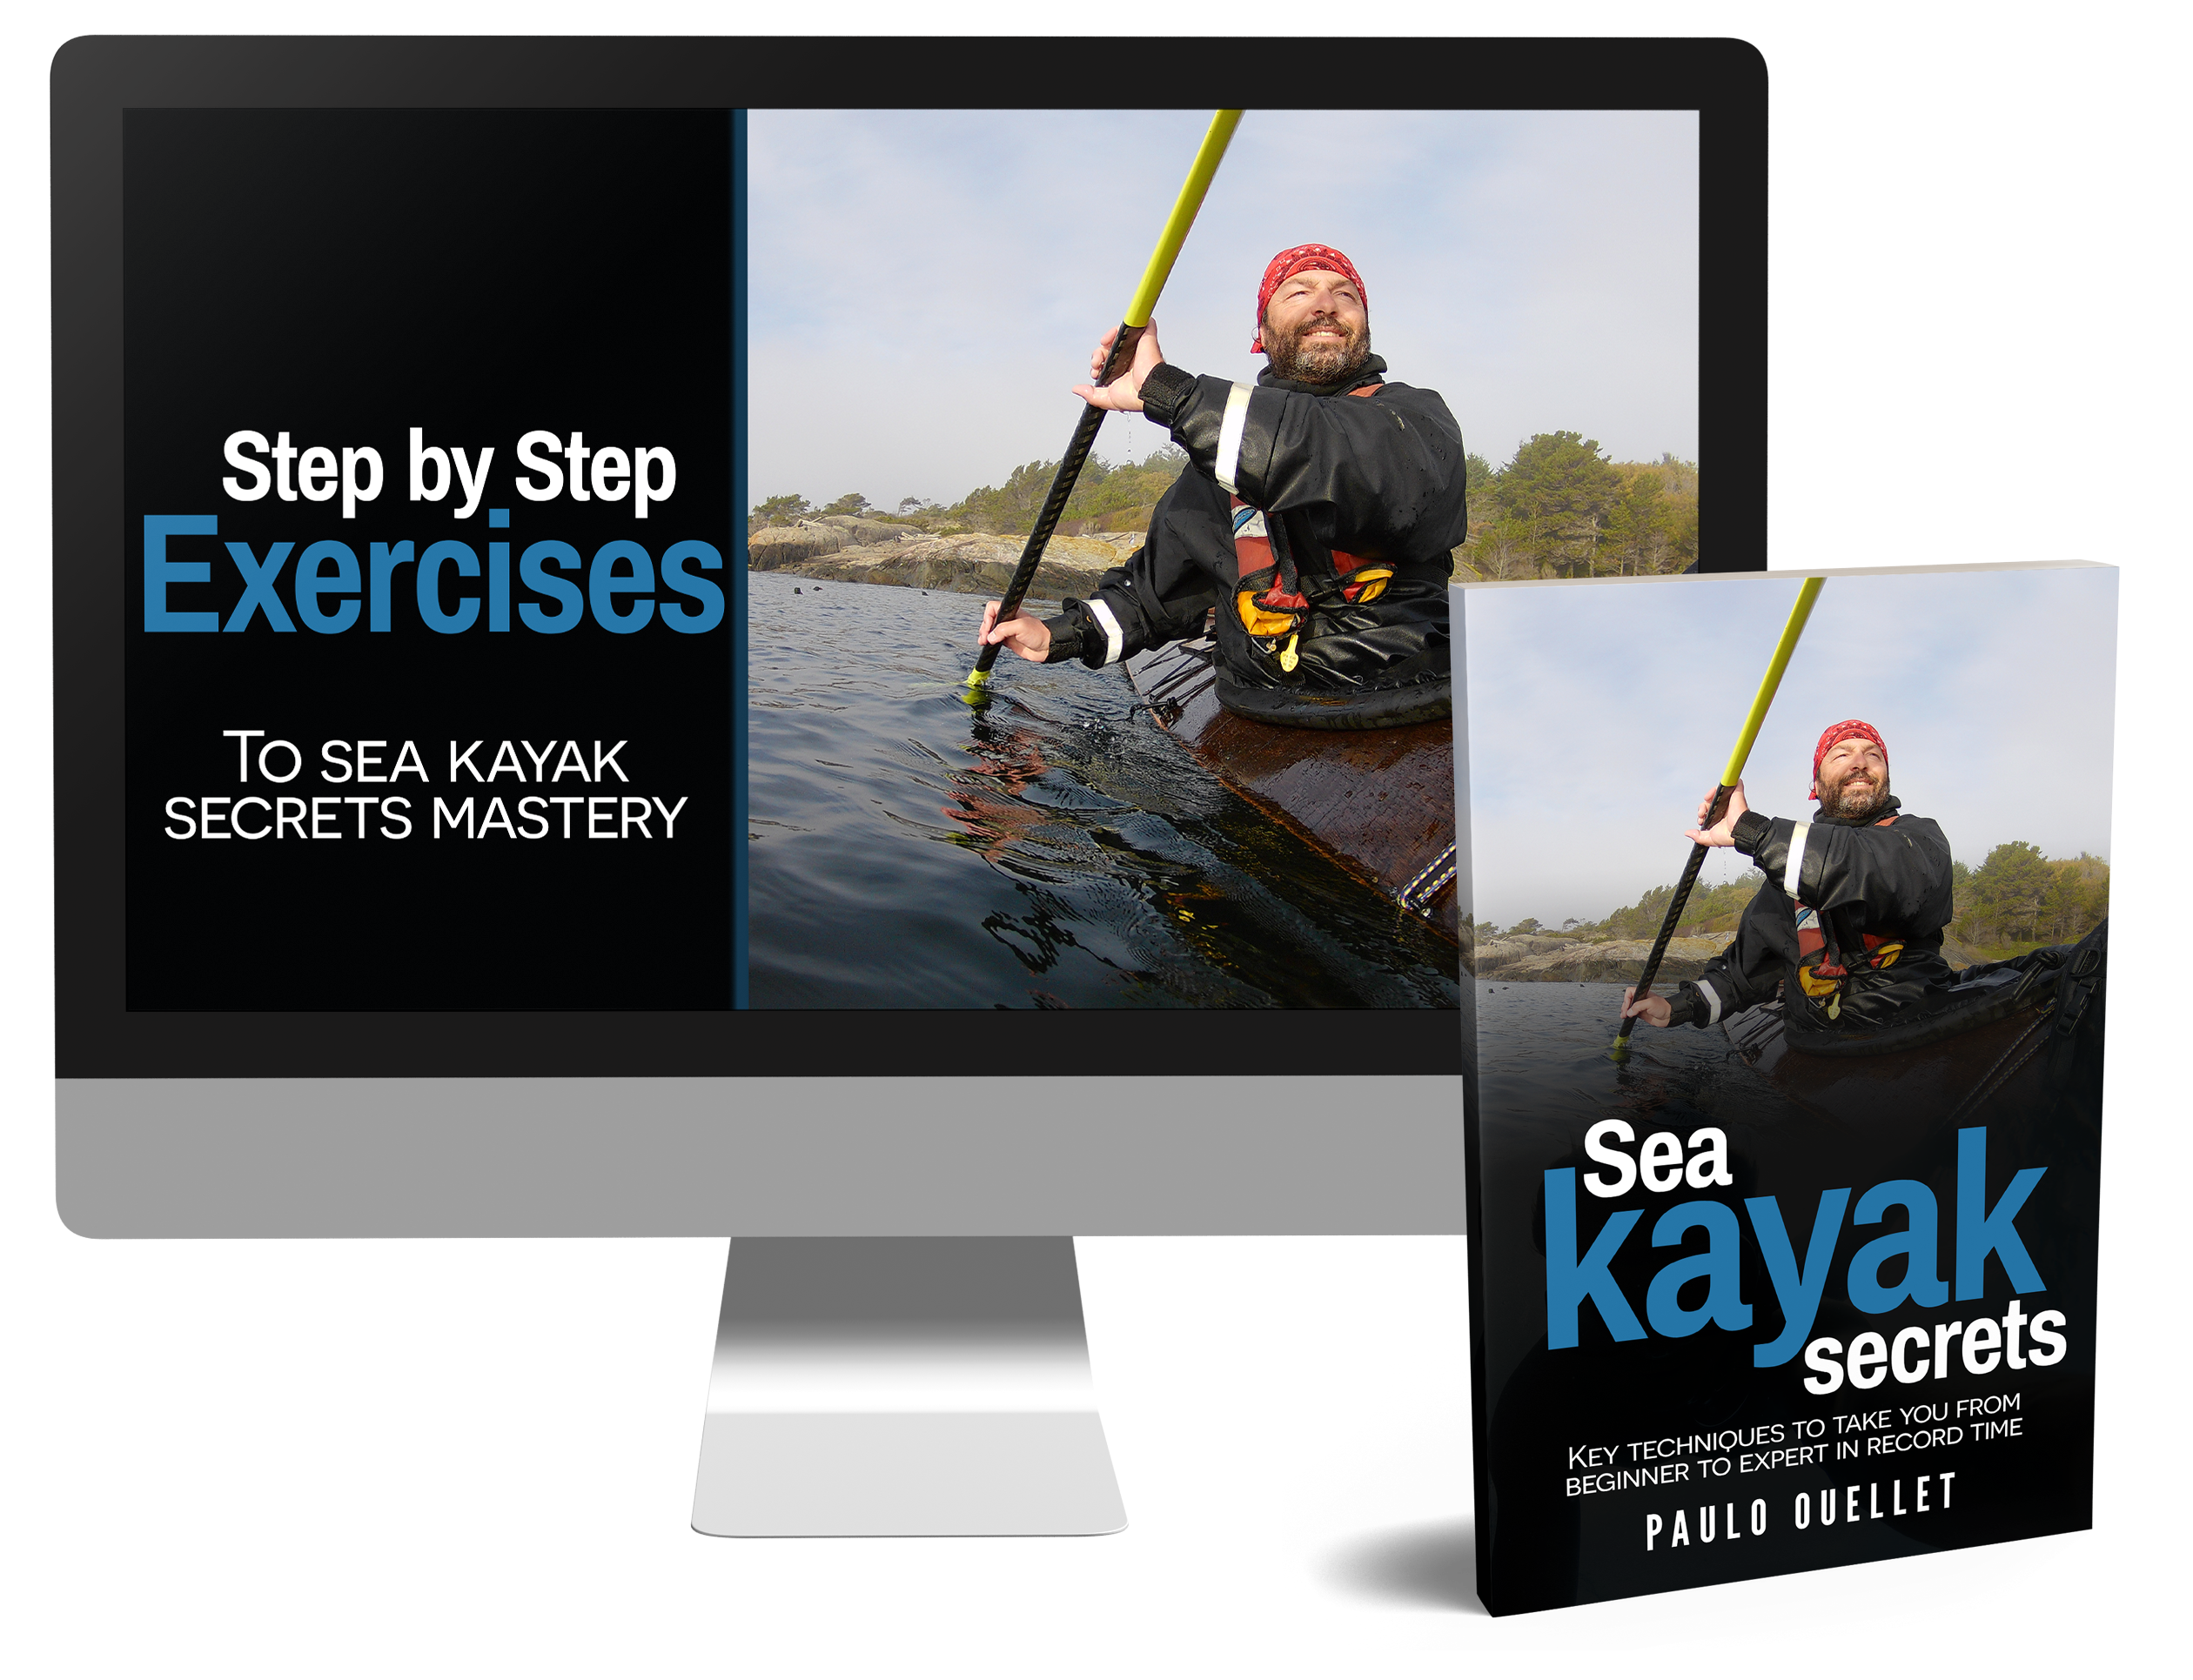 Sea Kayak Secrets